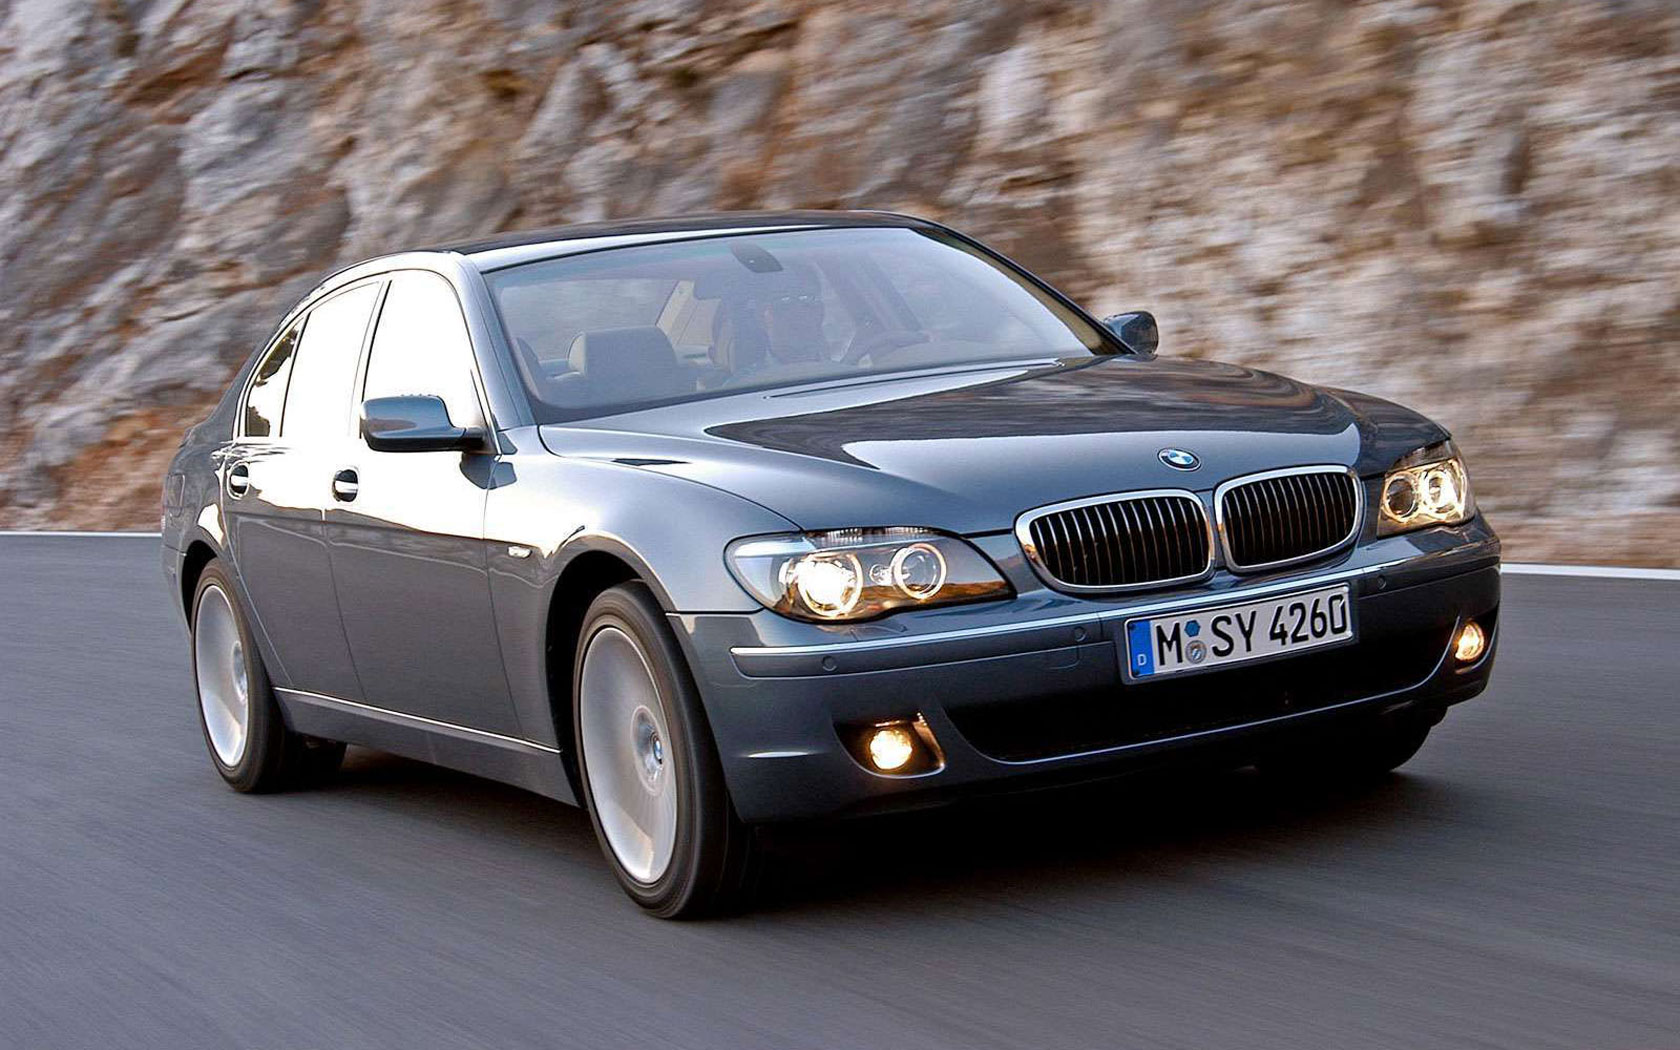  BMW 7-series (2005-2008)